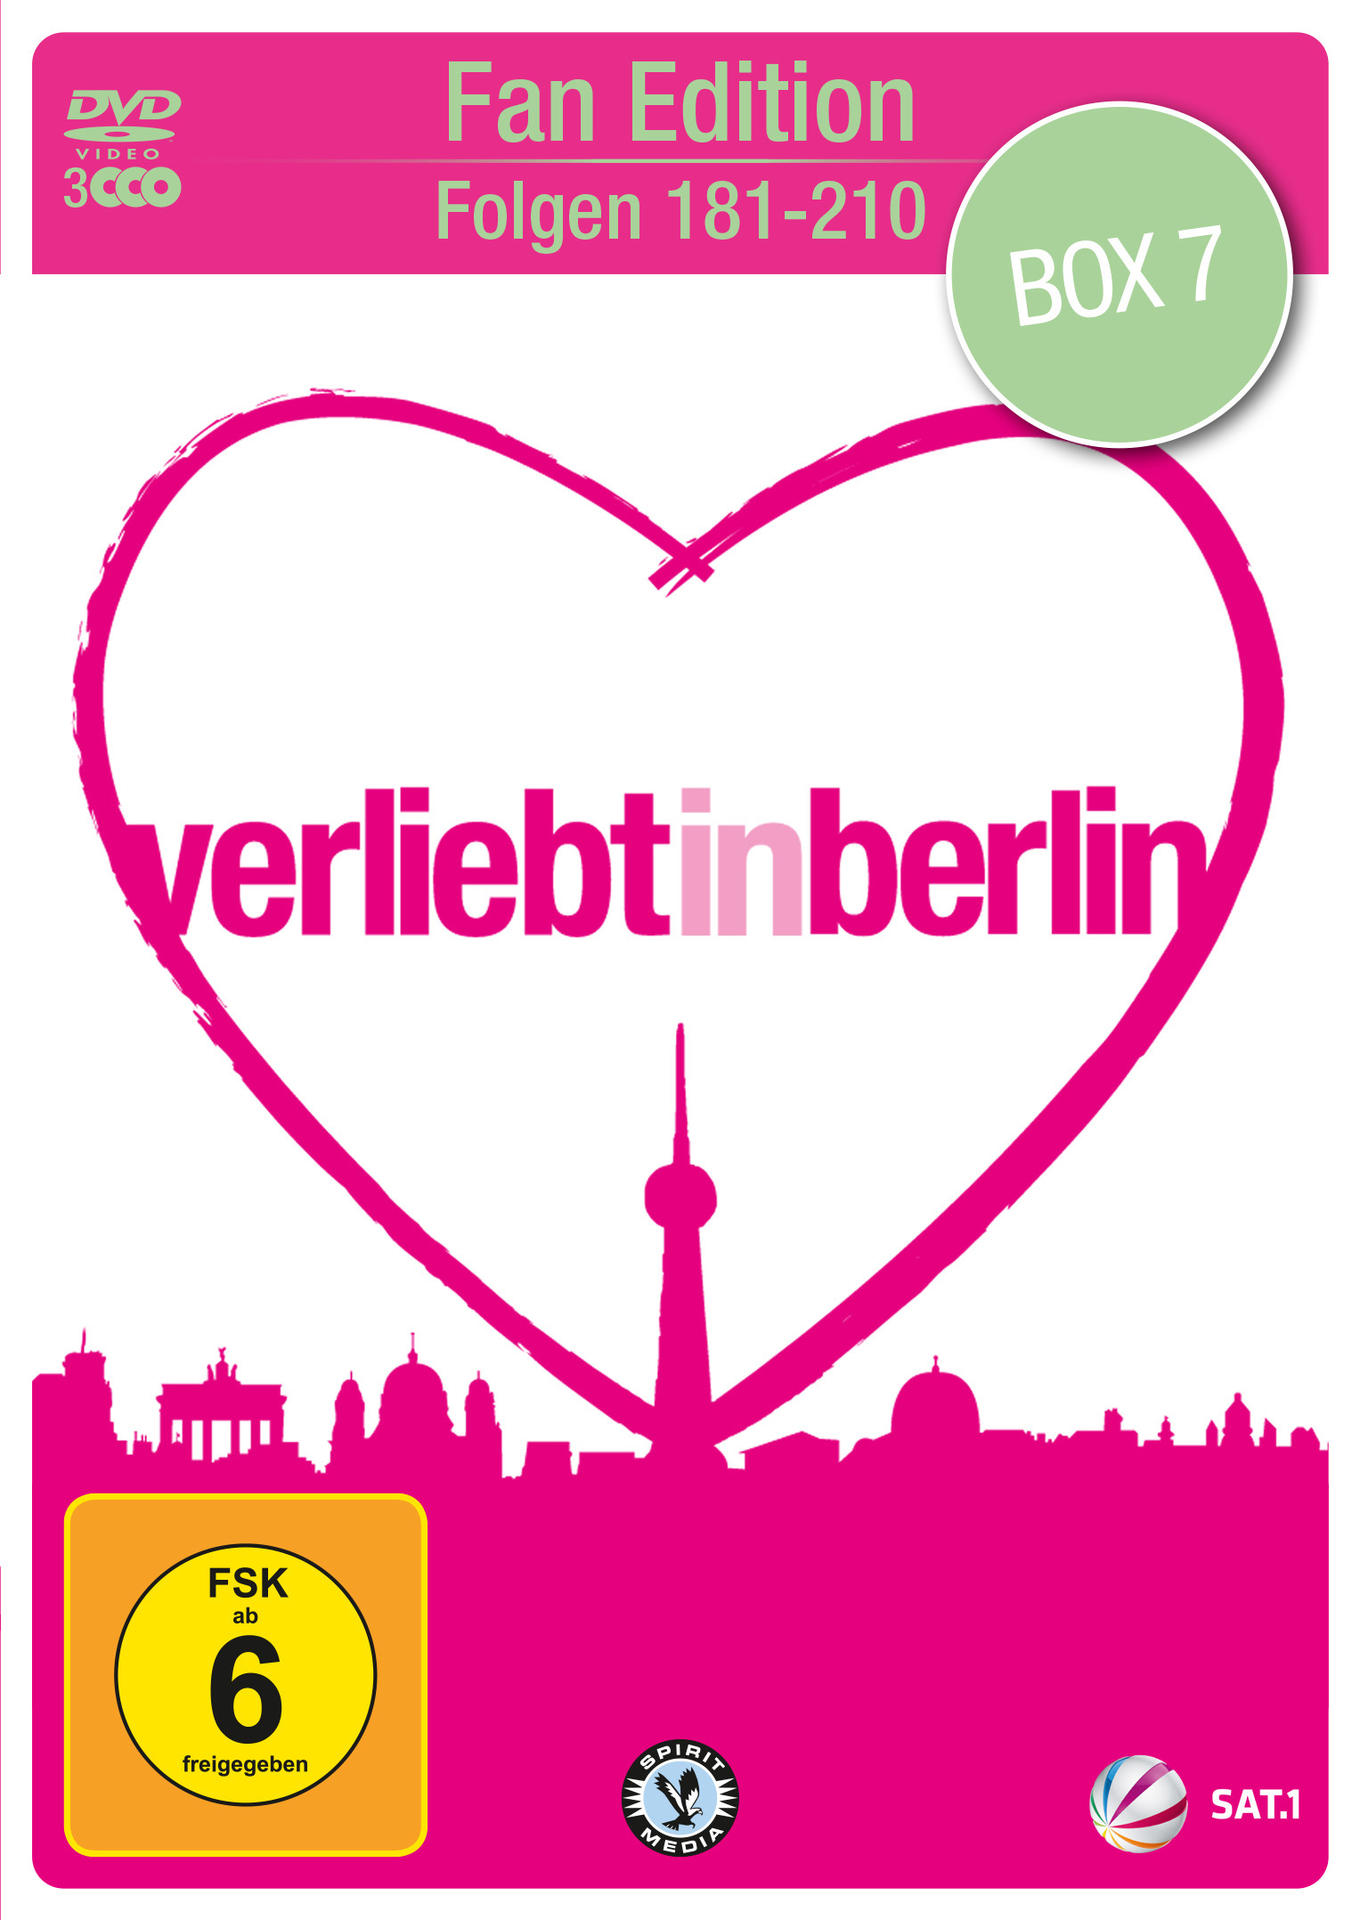 In 181-210 DVD - 7 Verliebt Box Berlin Folgen -